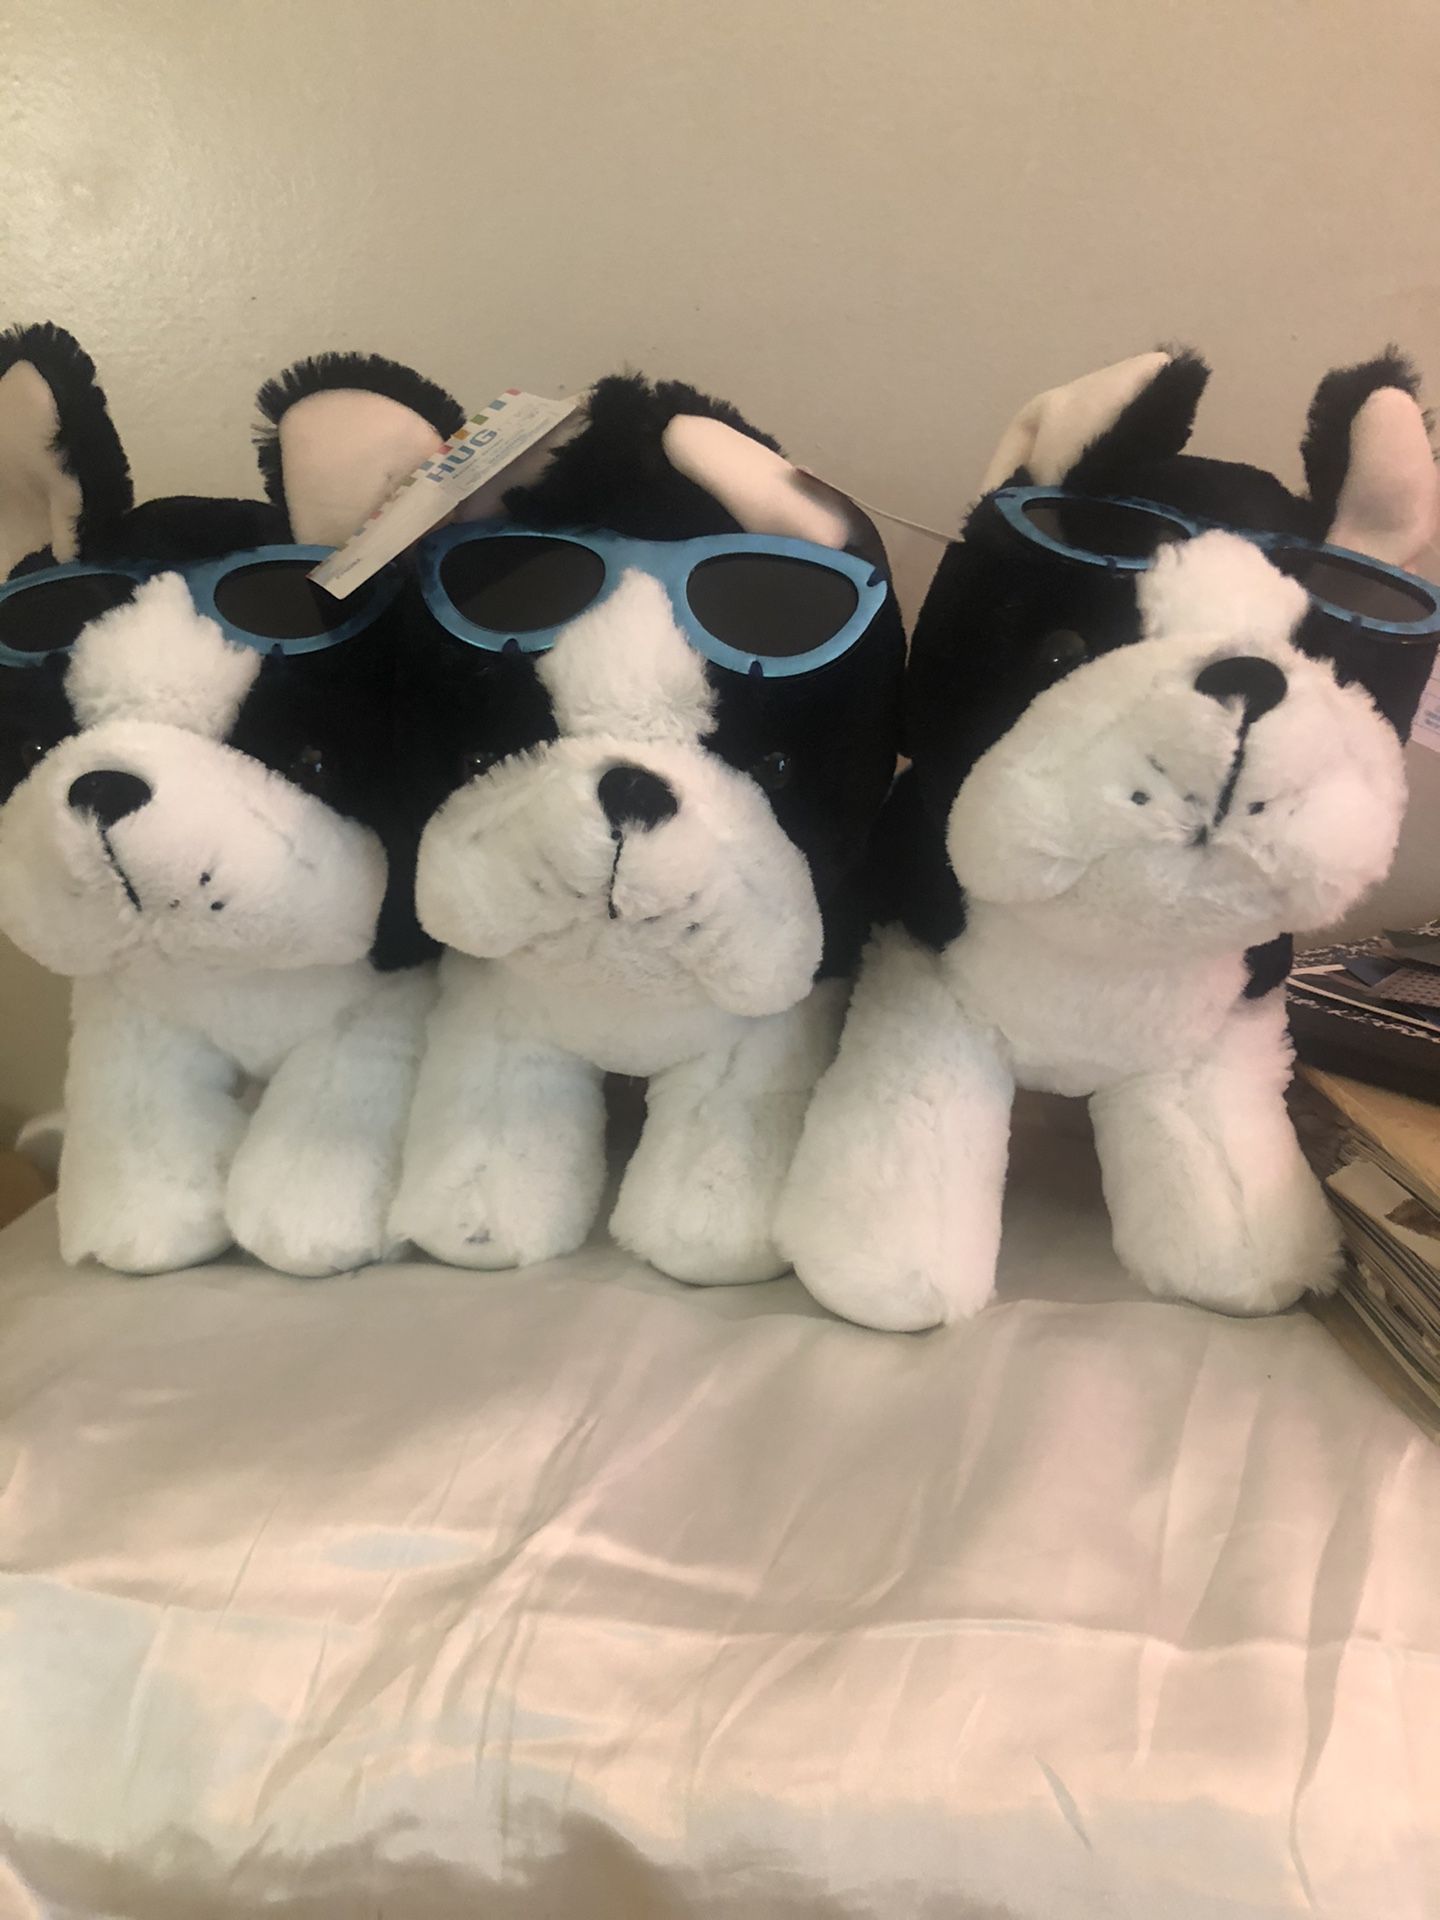 Three little French bull dog stuffed toys